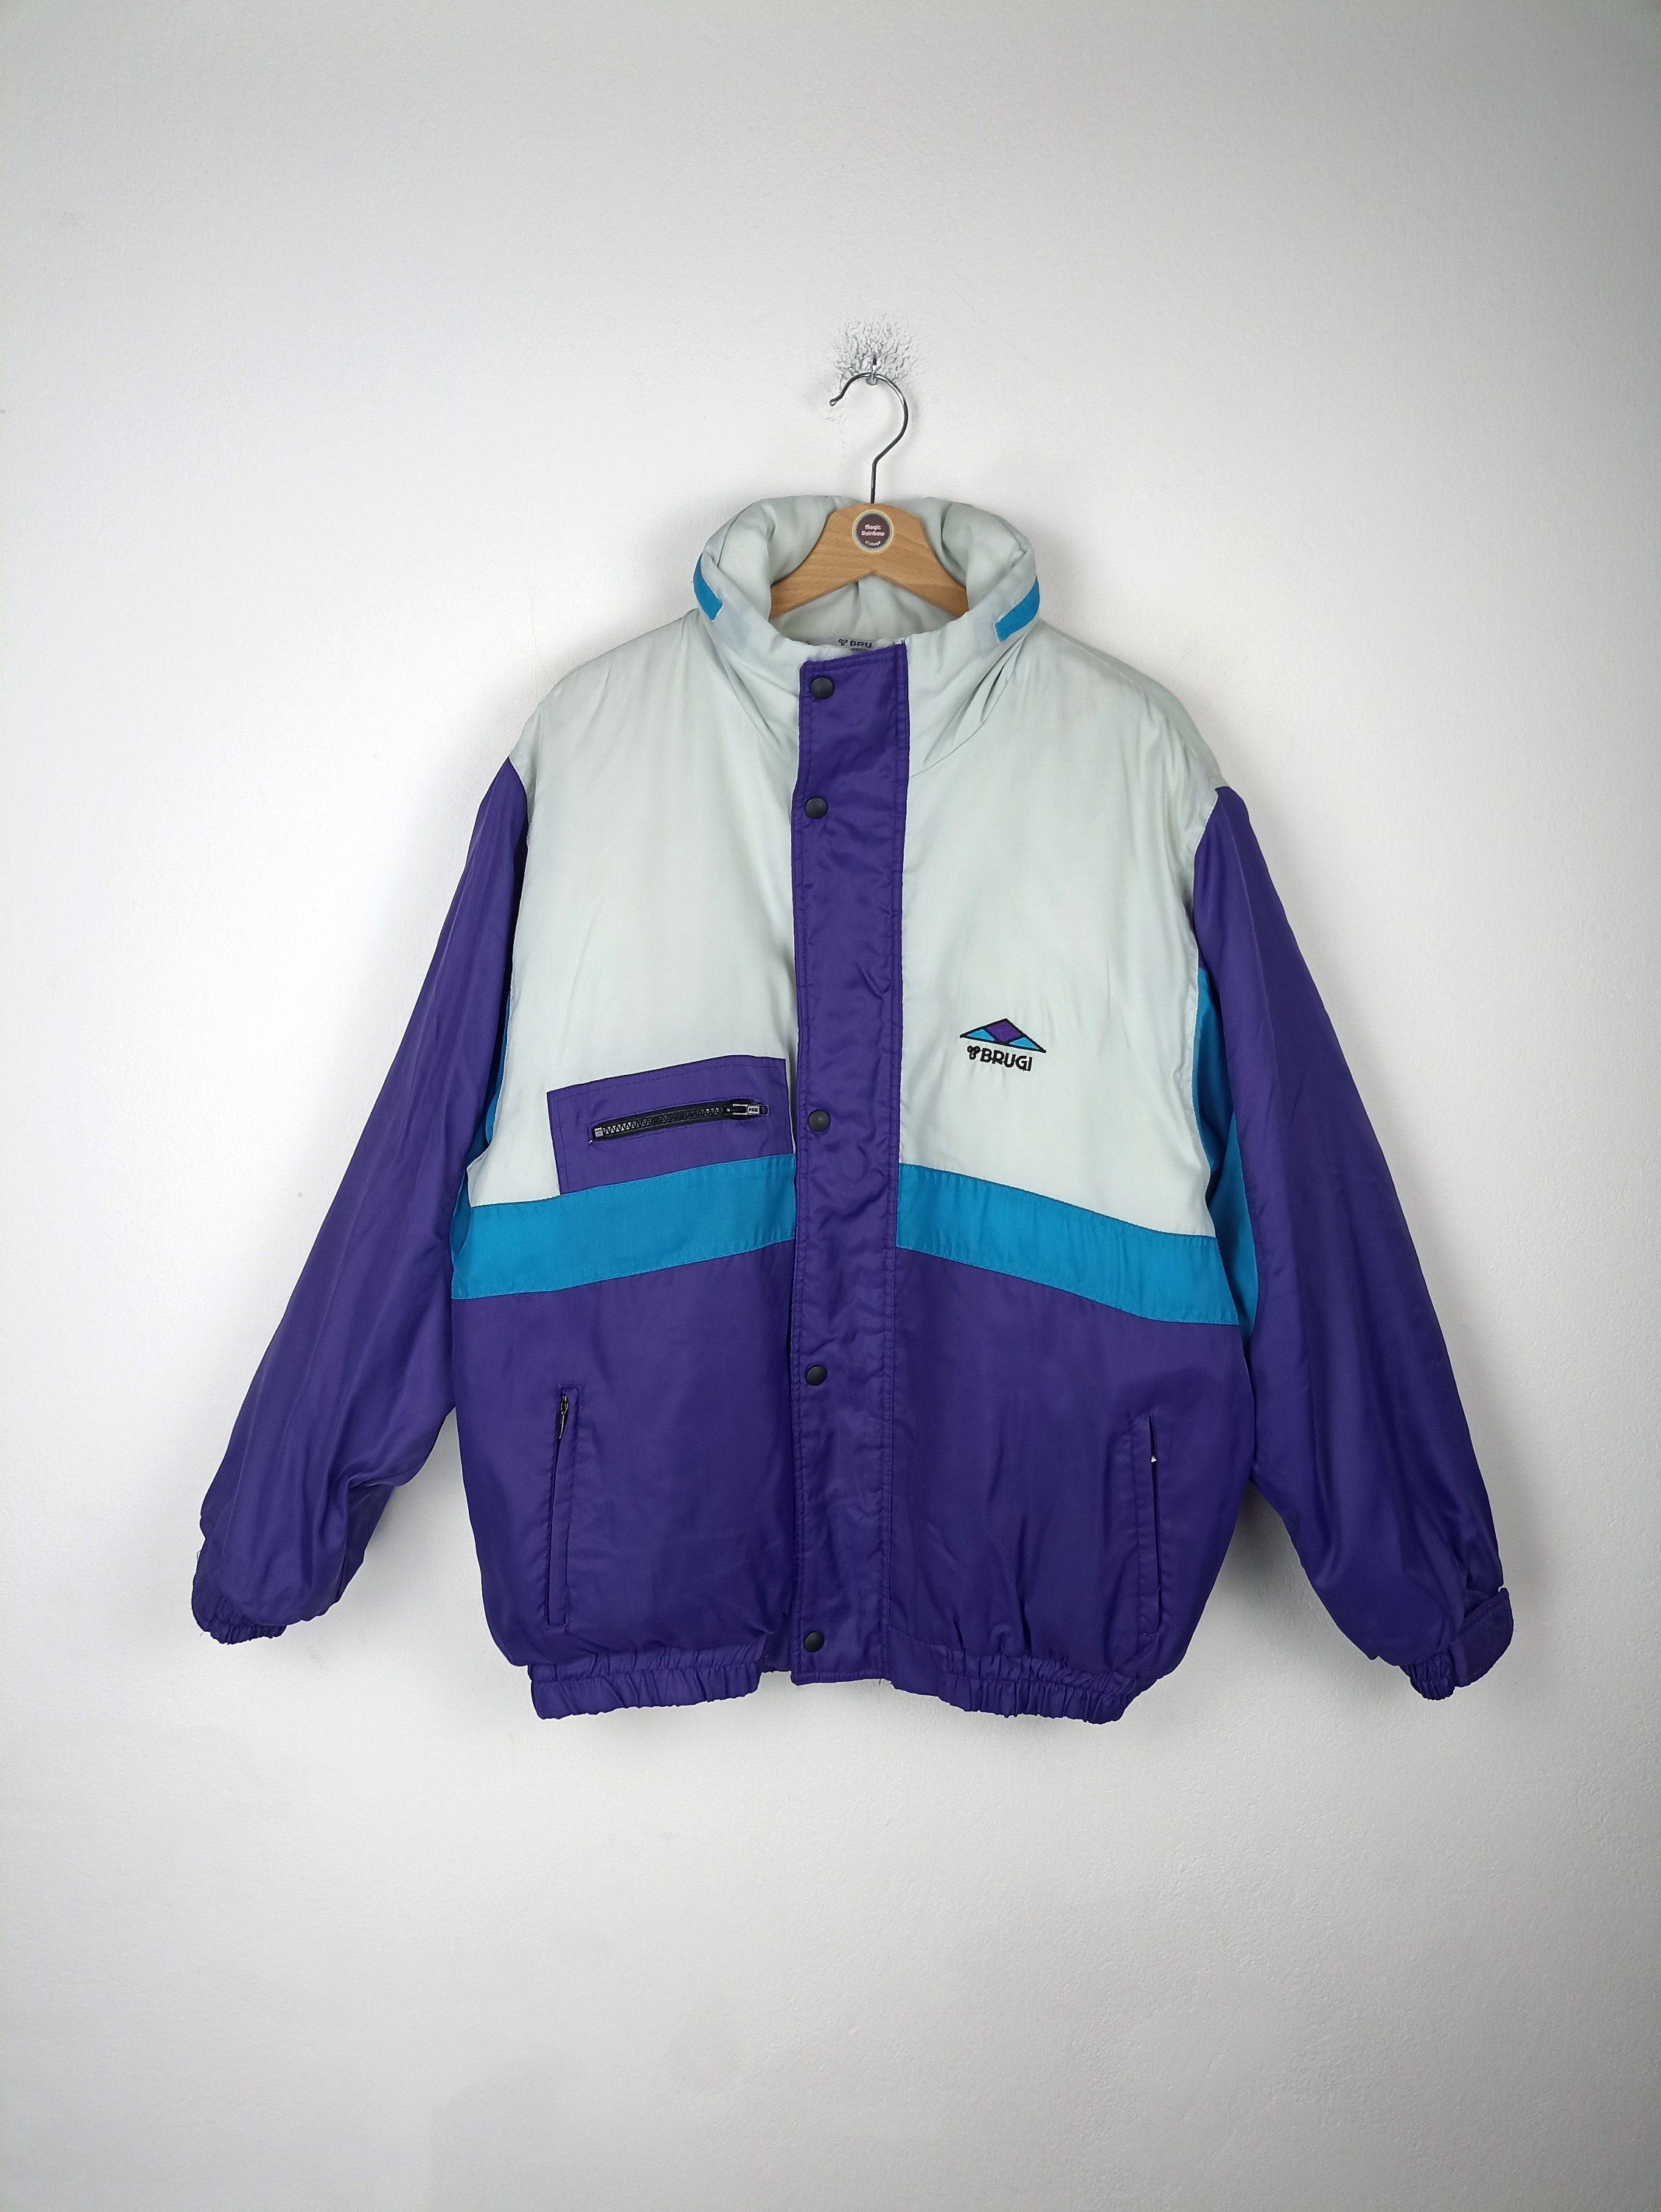 Brugi Snowboard Vintage s Ski Jacket Size XL   Etsy